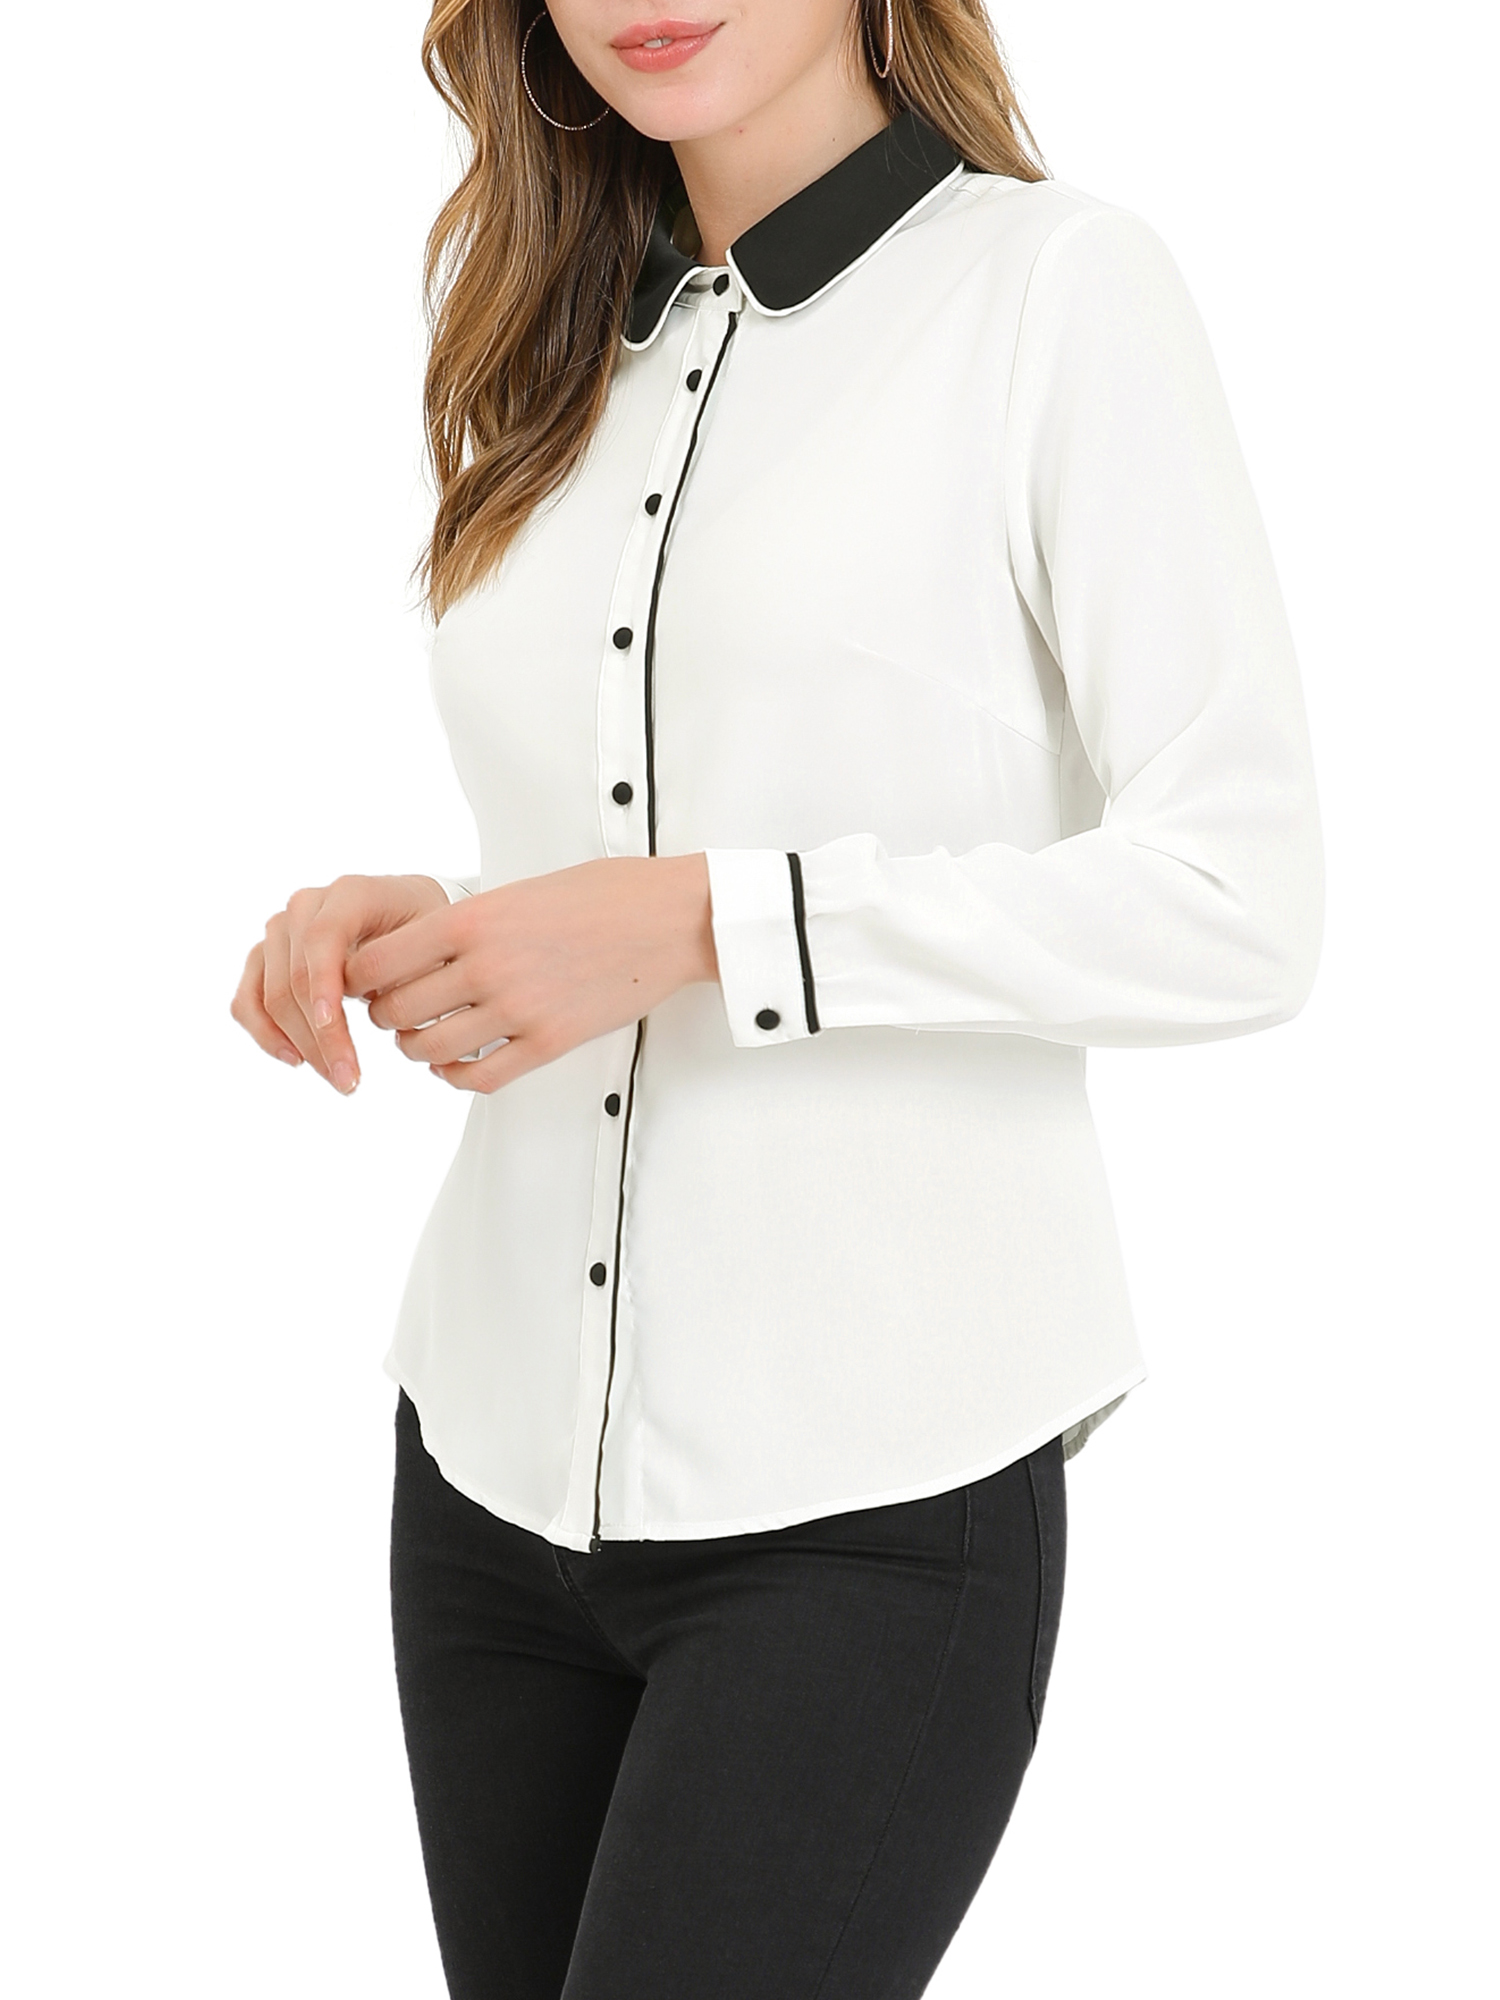 MODA NOVA Junior's Button Up Shirt Long Sleeve Buttons Cuff Top Blouse White XXL - image 4 of 5